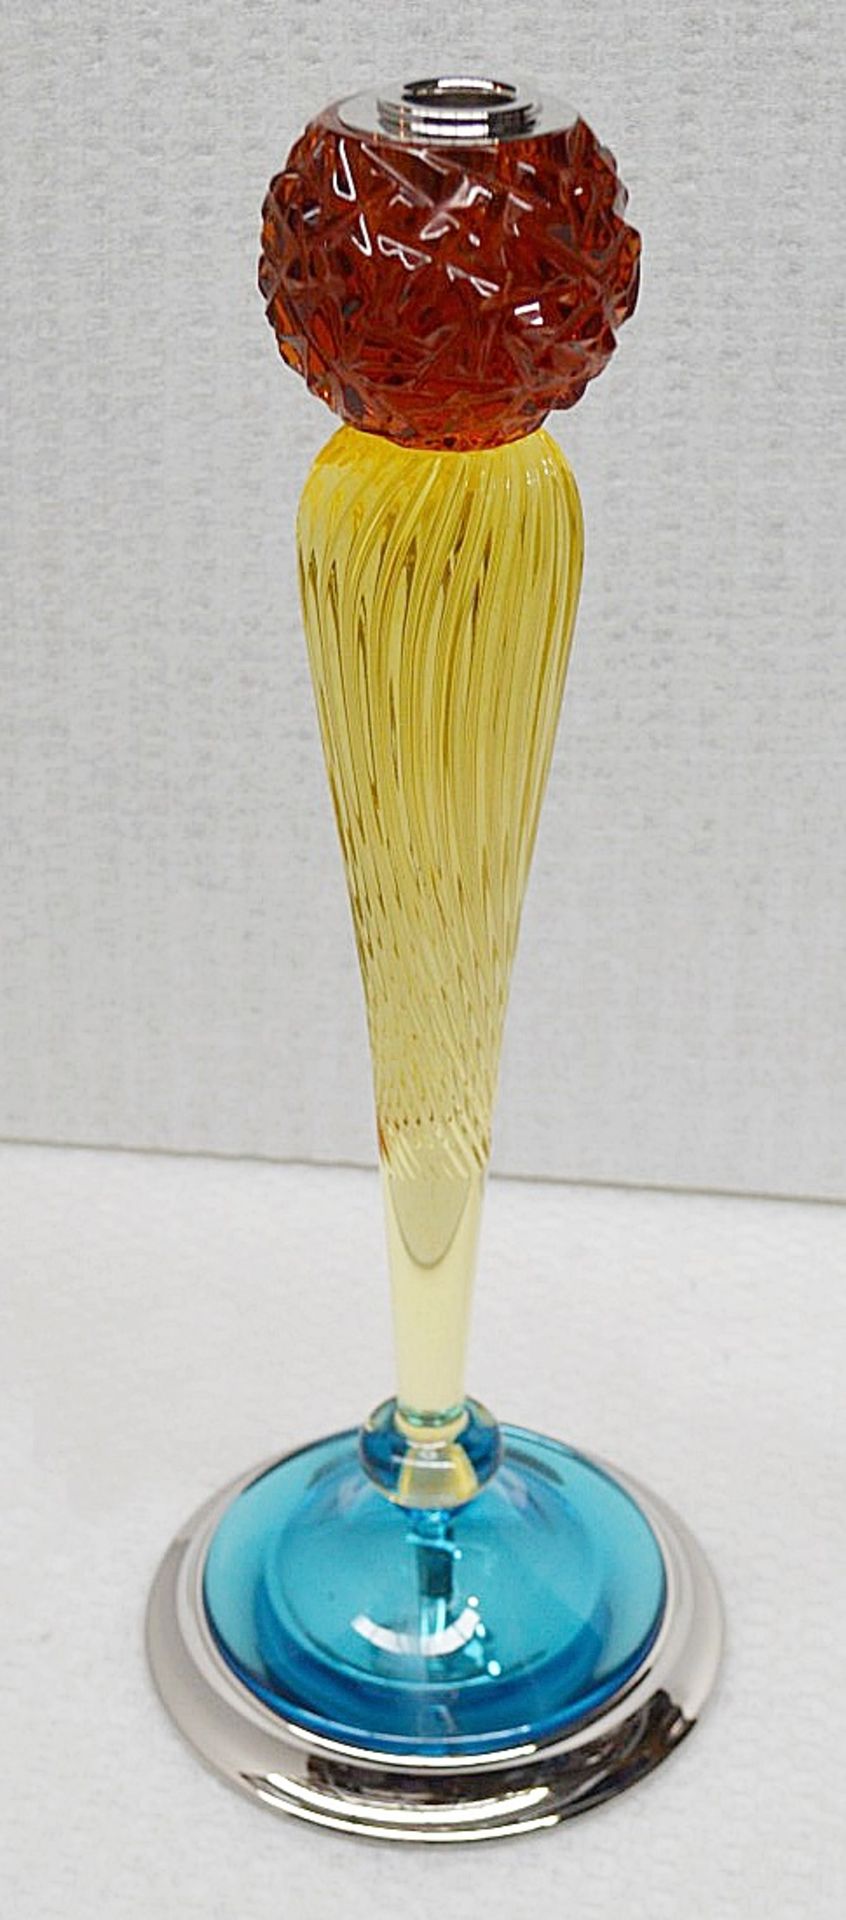 1 x BALDI 'Home Jewels' Italian Hand-crafted Artisan 'Sphere' Candle Stick *Original RRP £2.355.00*